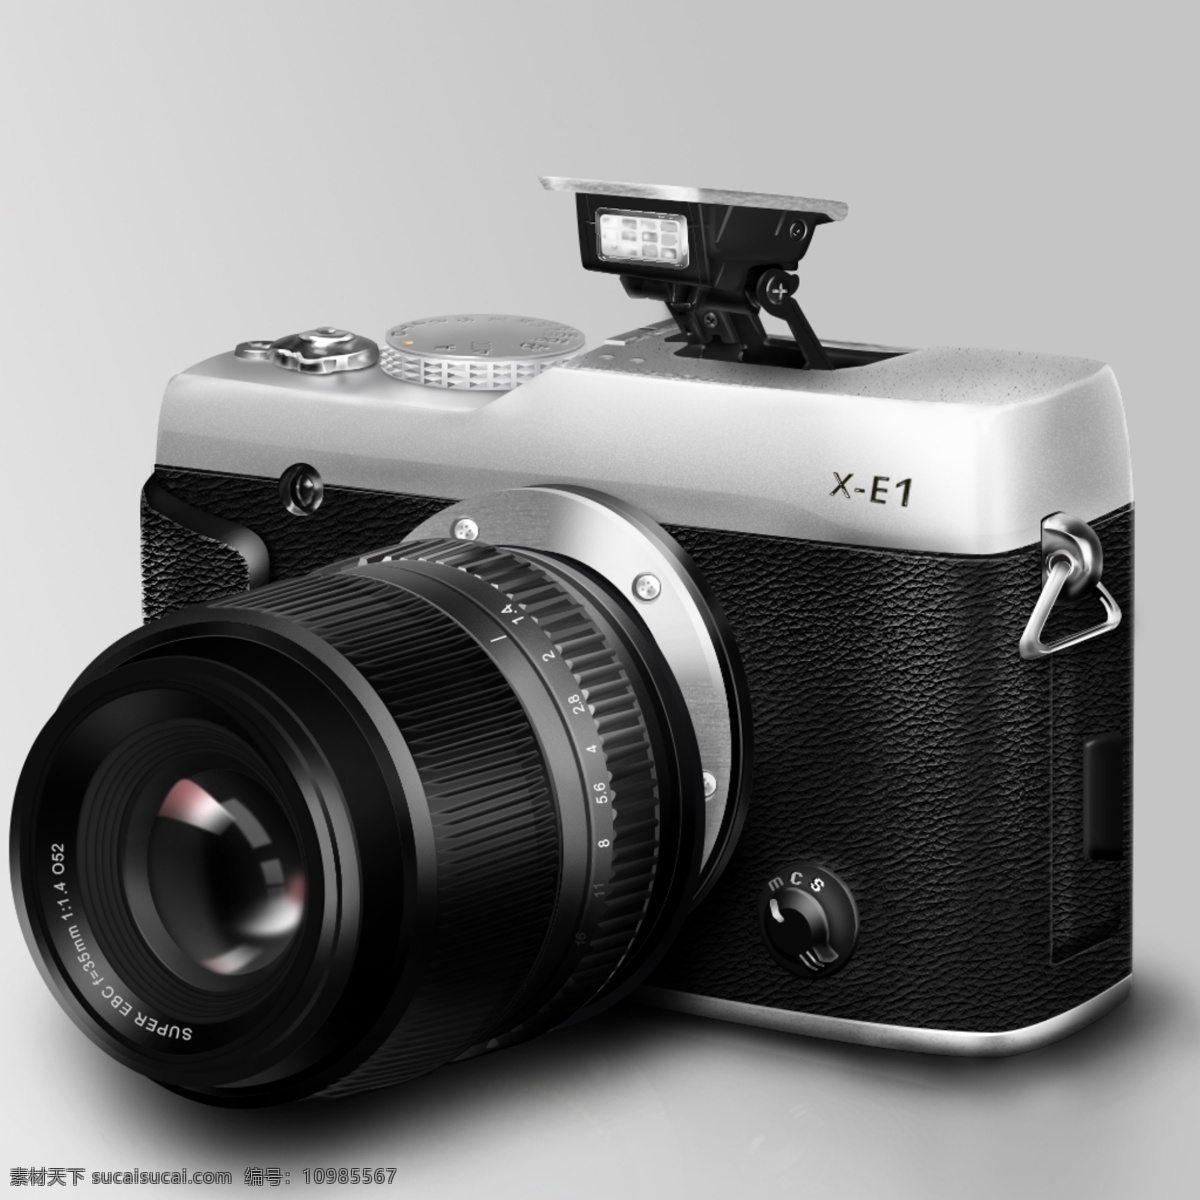 精美 相机 icon 图标 图标设计 icon设计 icon图标 网页图标 相机图标 相机icon 照相机图标 照相机 单反相机